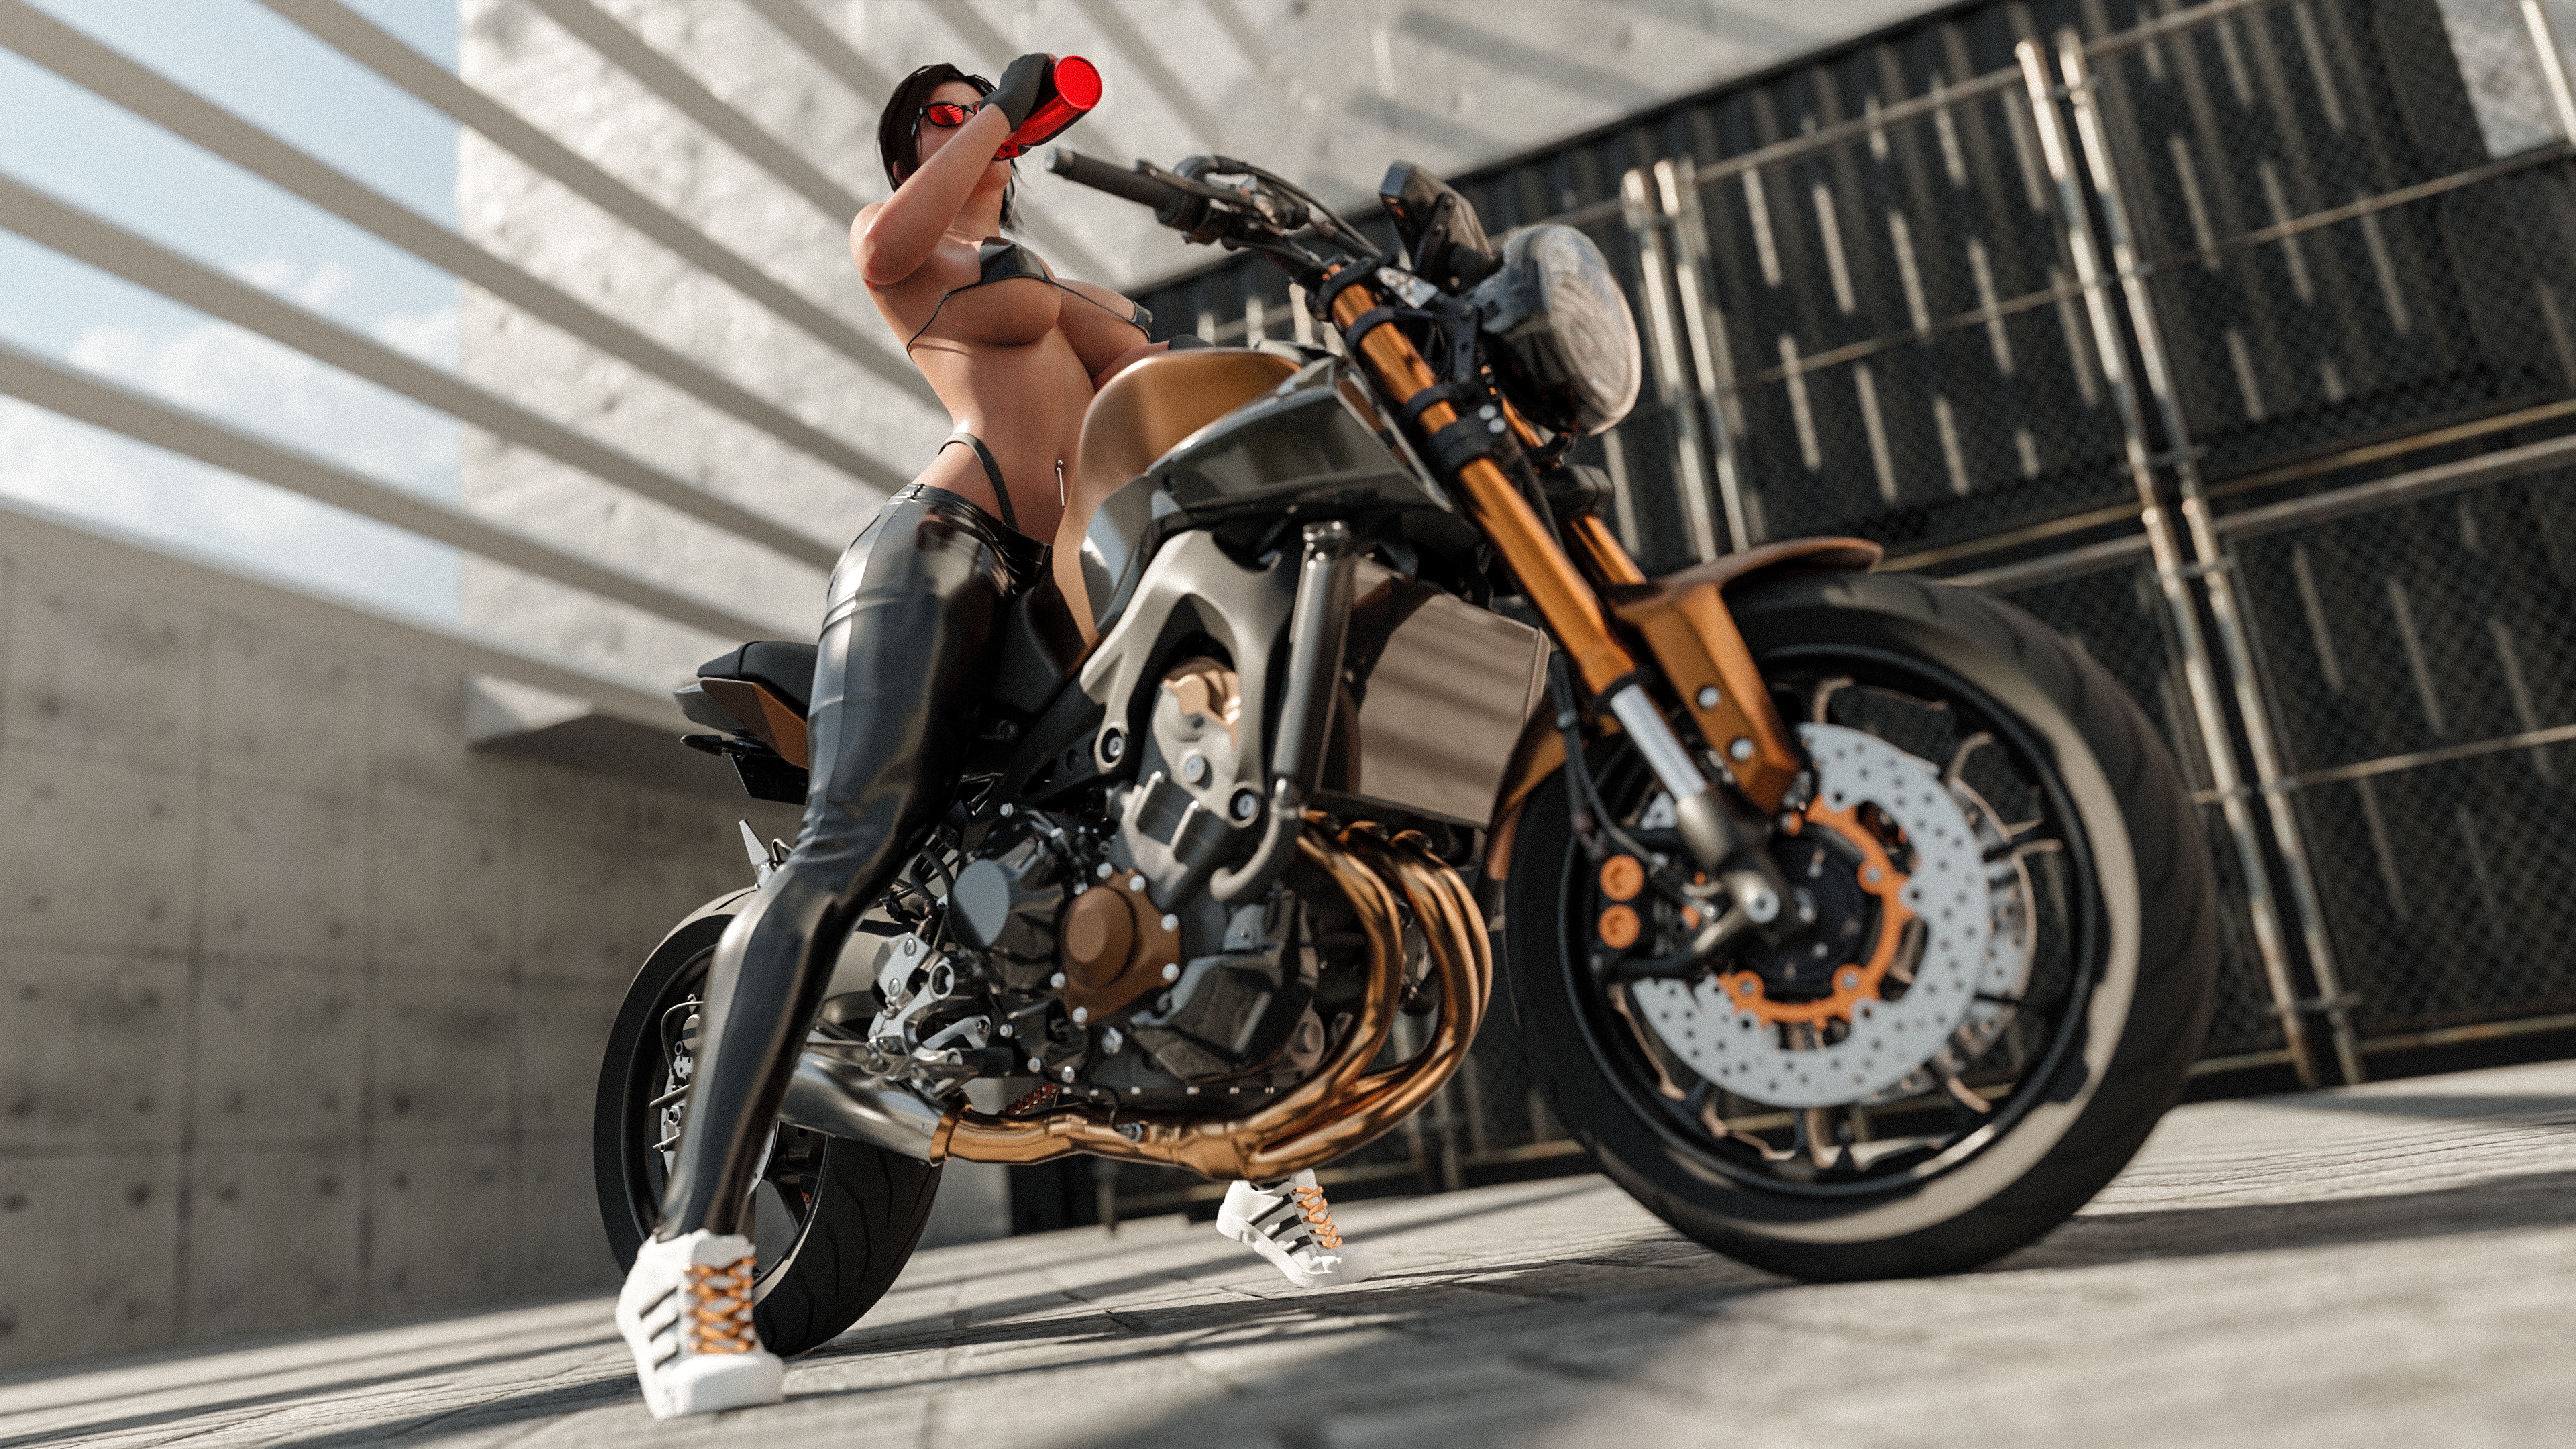 Lara Bike Collection 1 Lara Croft Tomb Raider Sexy 3d Girl Big Tits Bike Moto Motorcycle Latex Leather Bikini 3